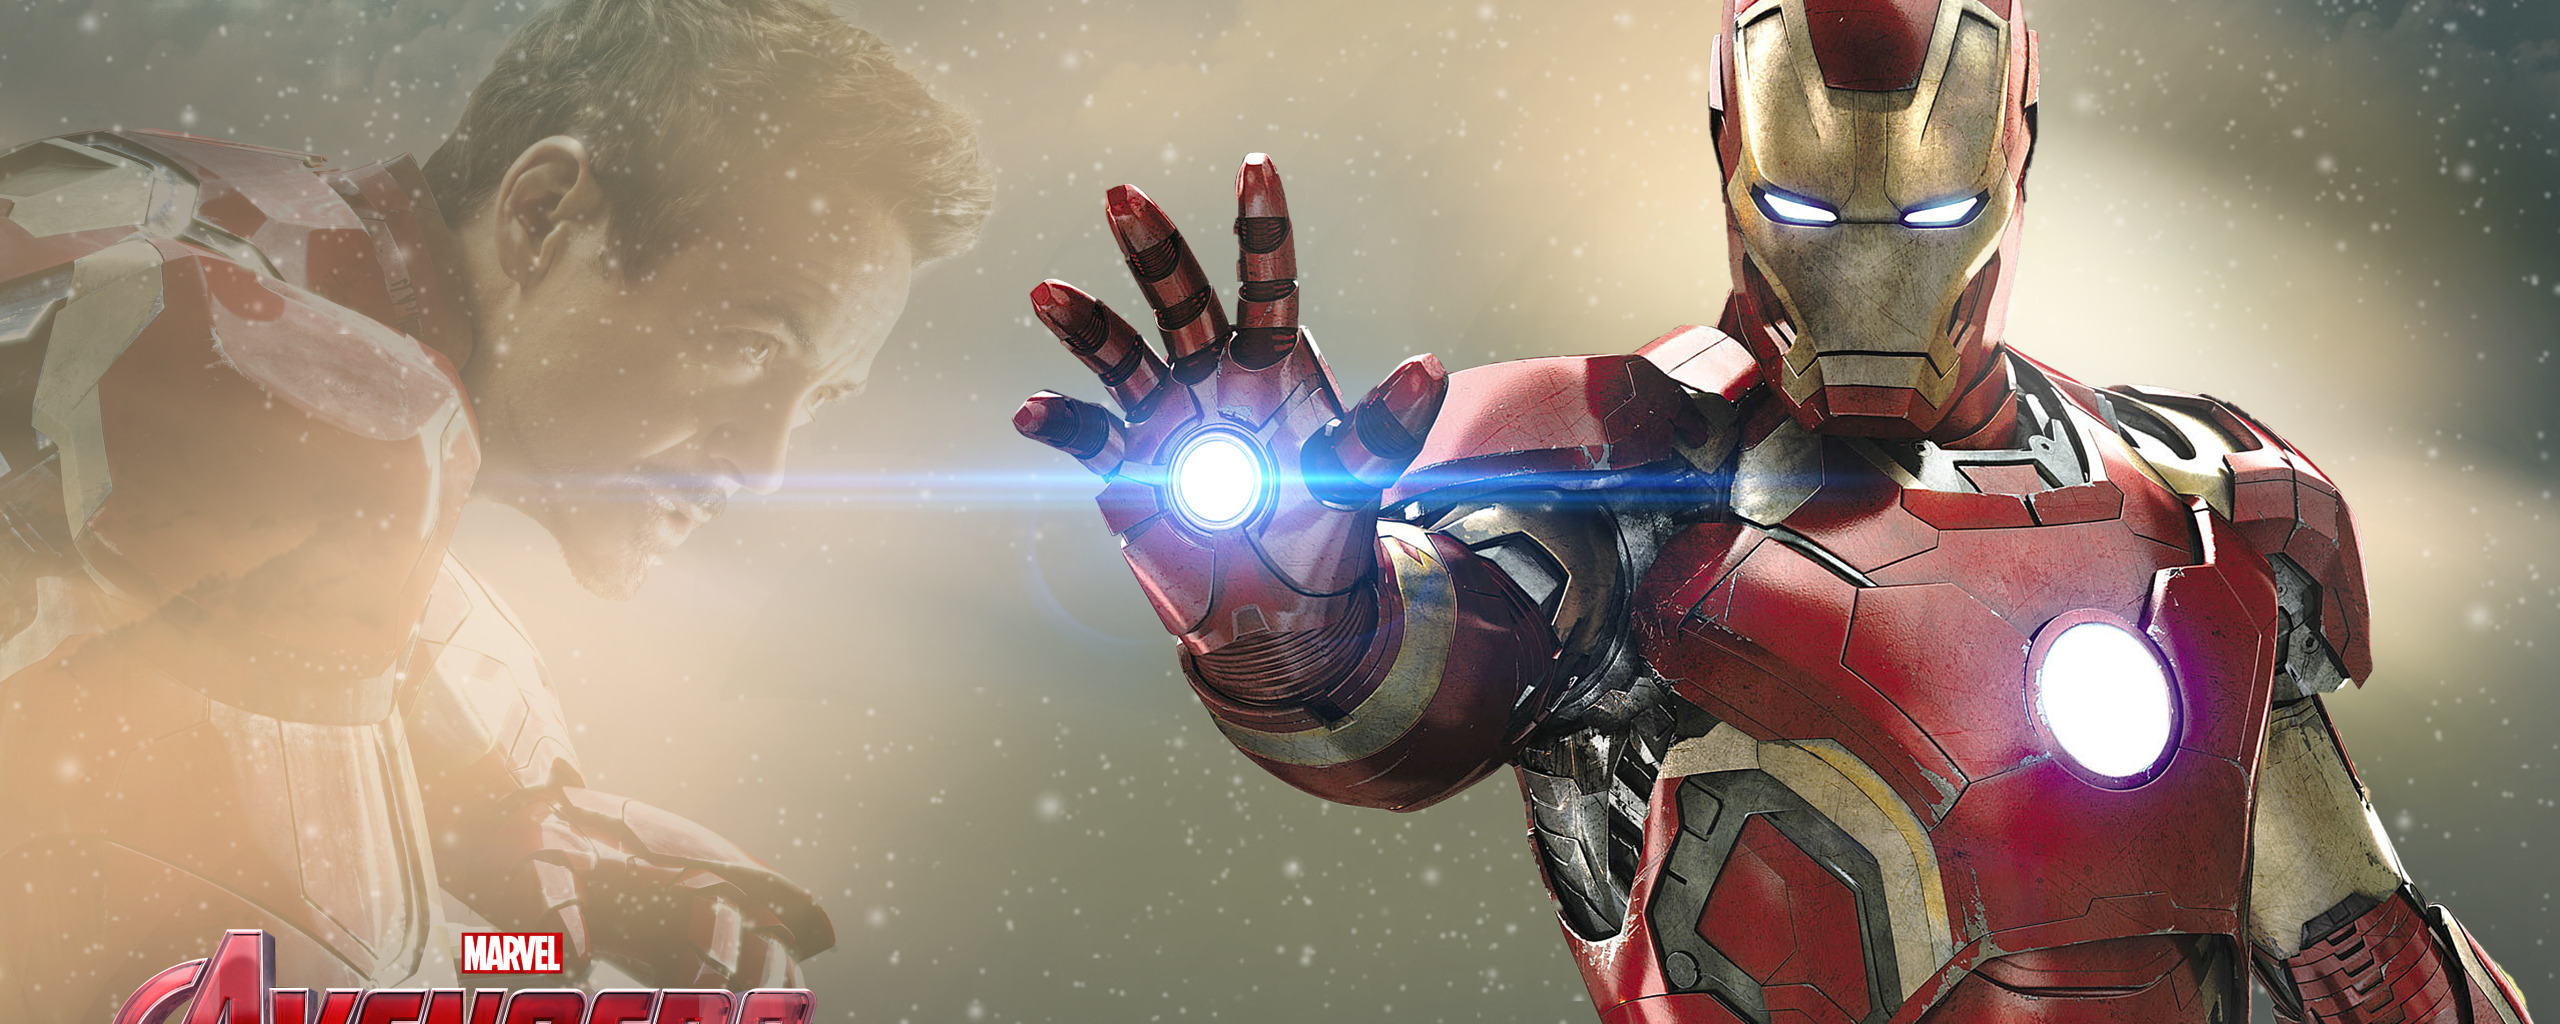 Iron Man, Tony Stark, Avengers: Age of Ultron, Мстители: Эра Альтрона. 